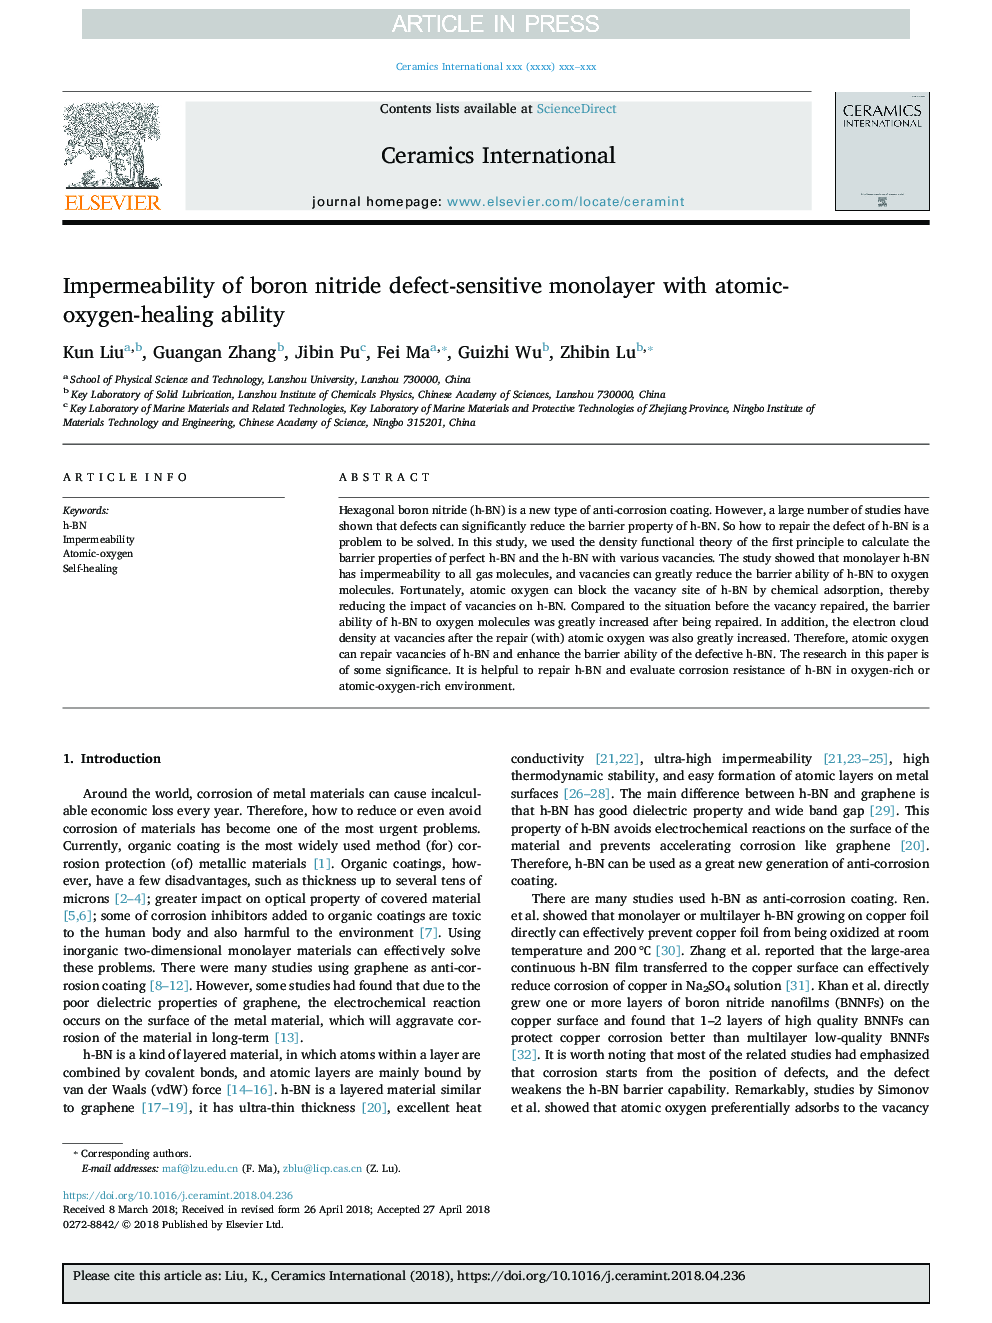 Impermeability of boron nitride defect-sensitive monolayer with atomic-oxygen-healing ability